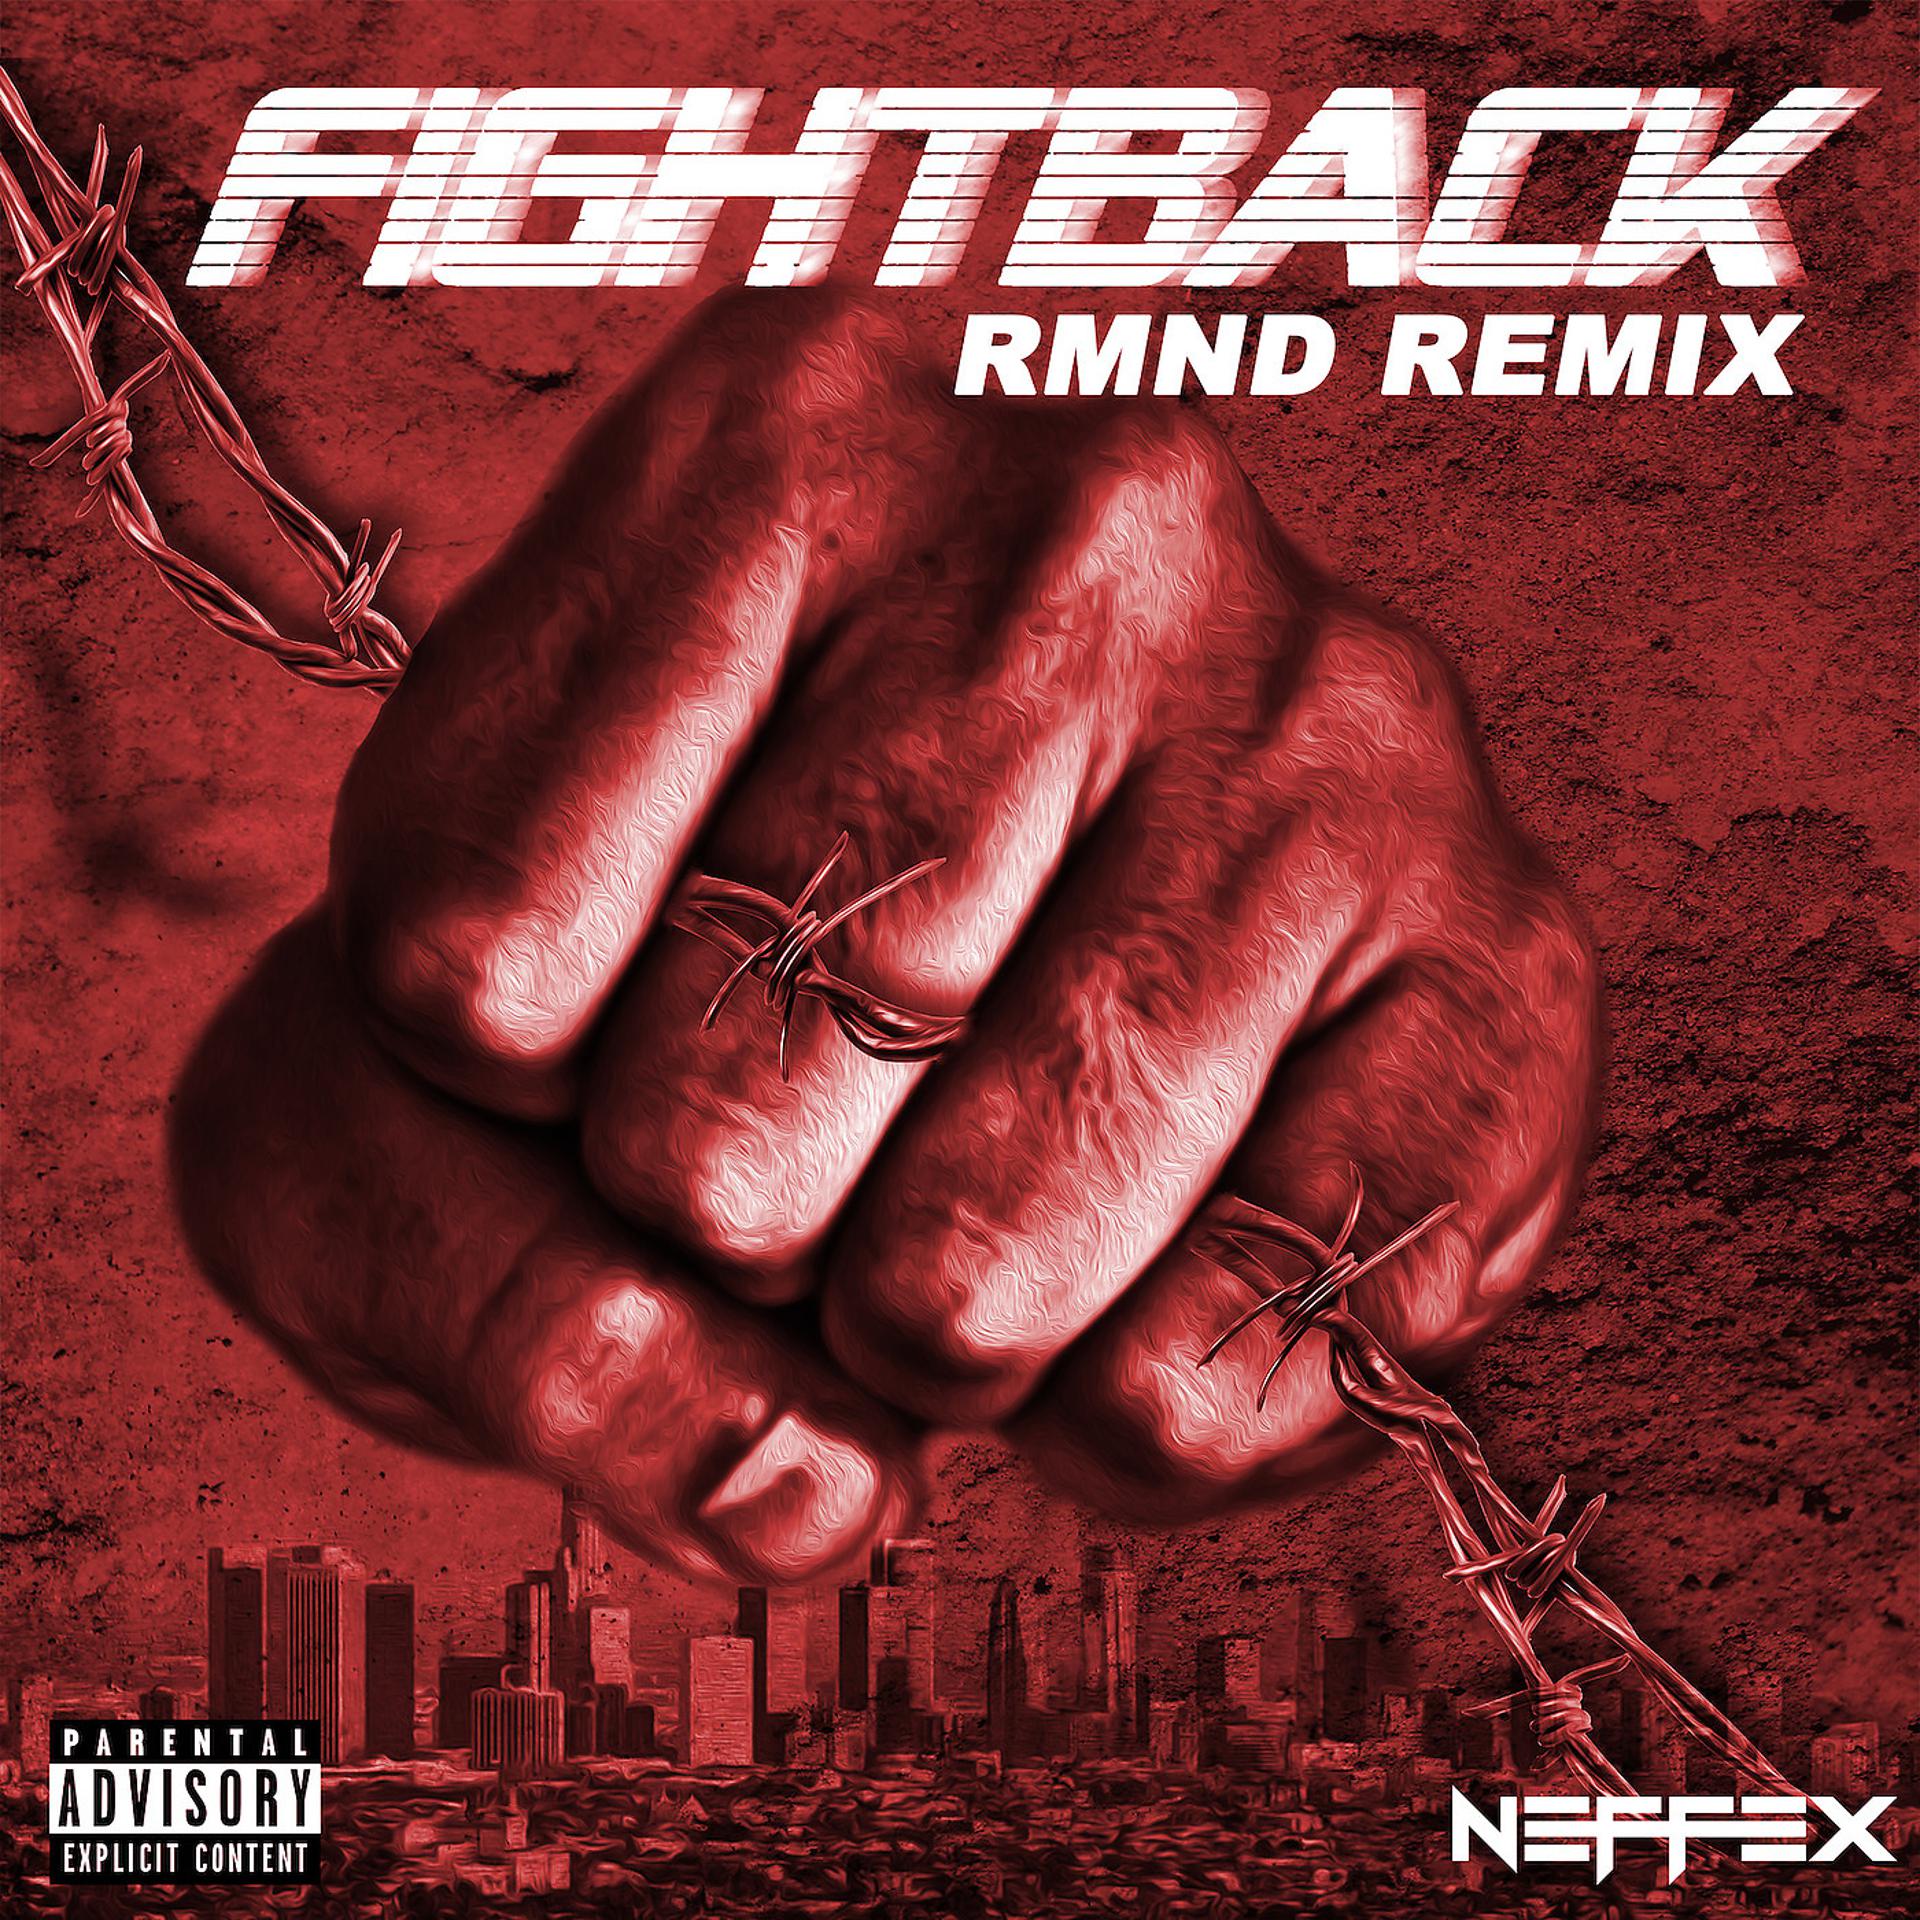 Neffex fight back. Fight back barren Gates Remix NEFFEX. Fight back (barren Gates Remix). NEFFEX Fight back RMND Remix. Fight back ненависть.